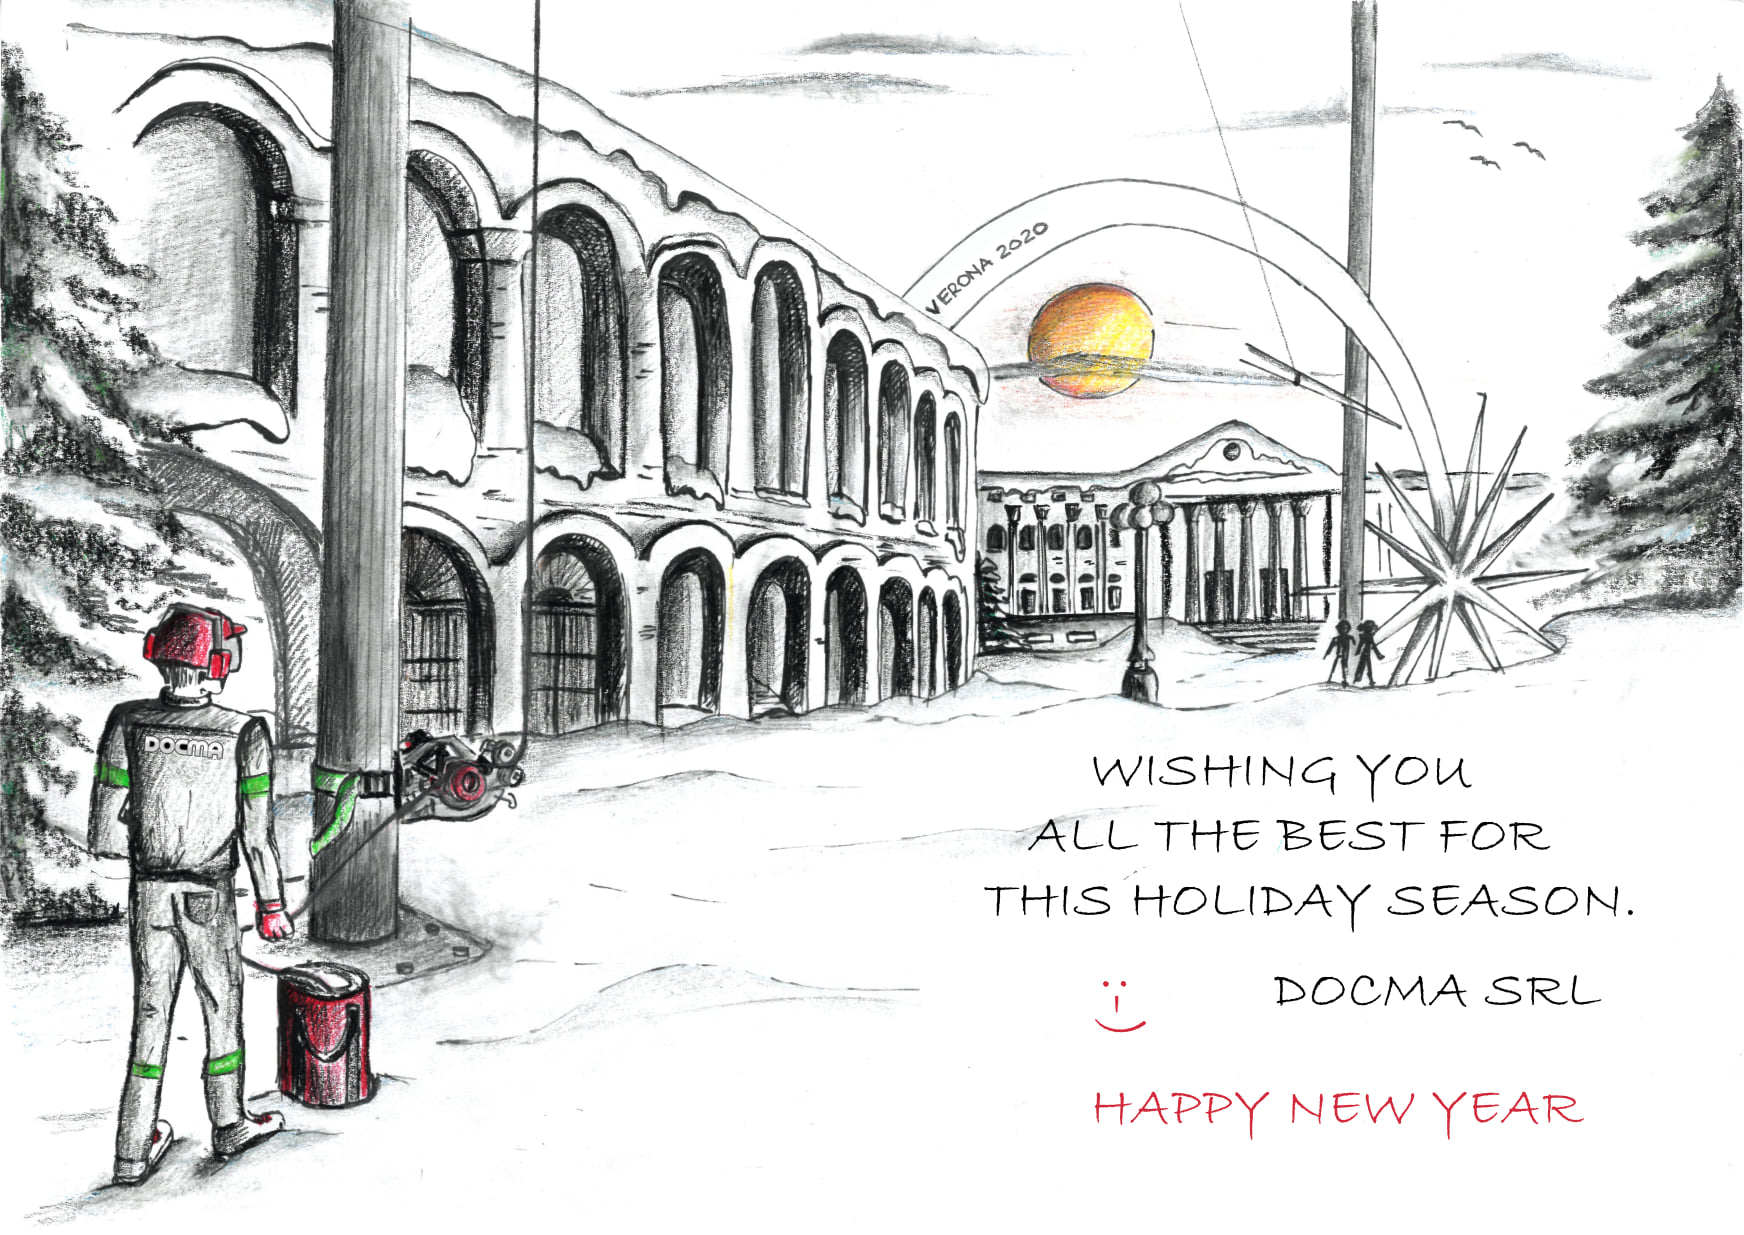 Happy Holidays from Docma Srl.